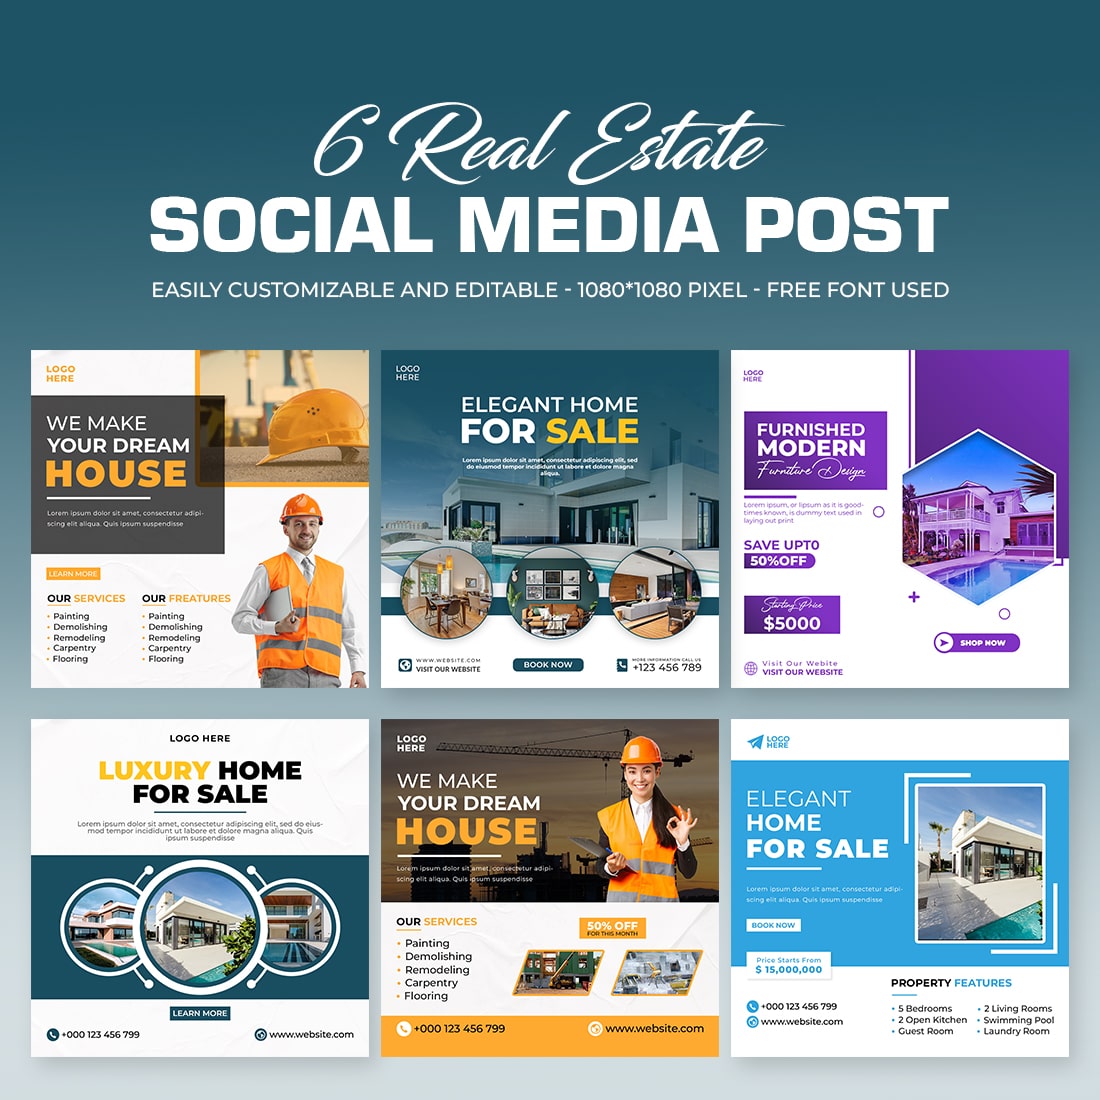 6 Real Estate Social Media Post Design cover image.